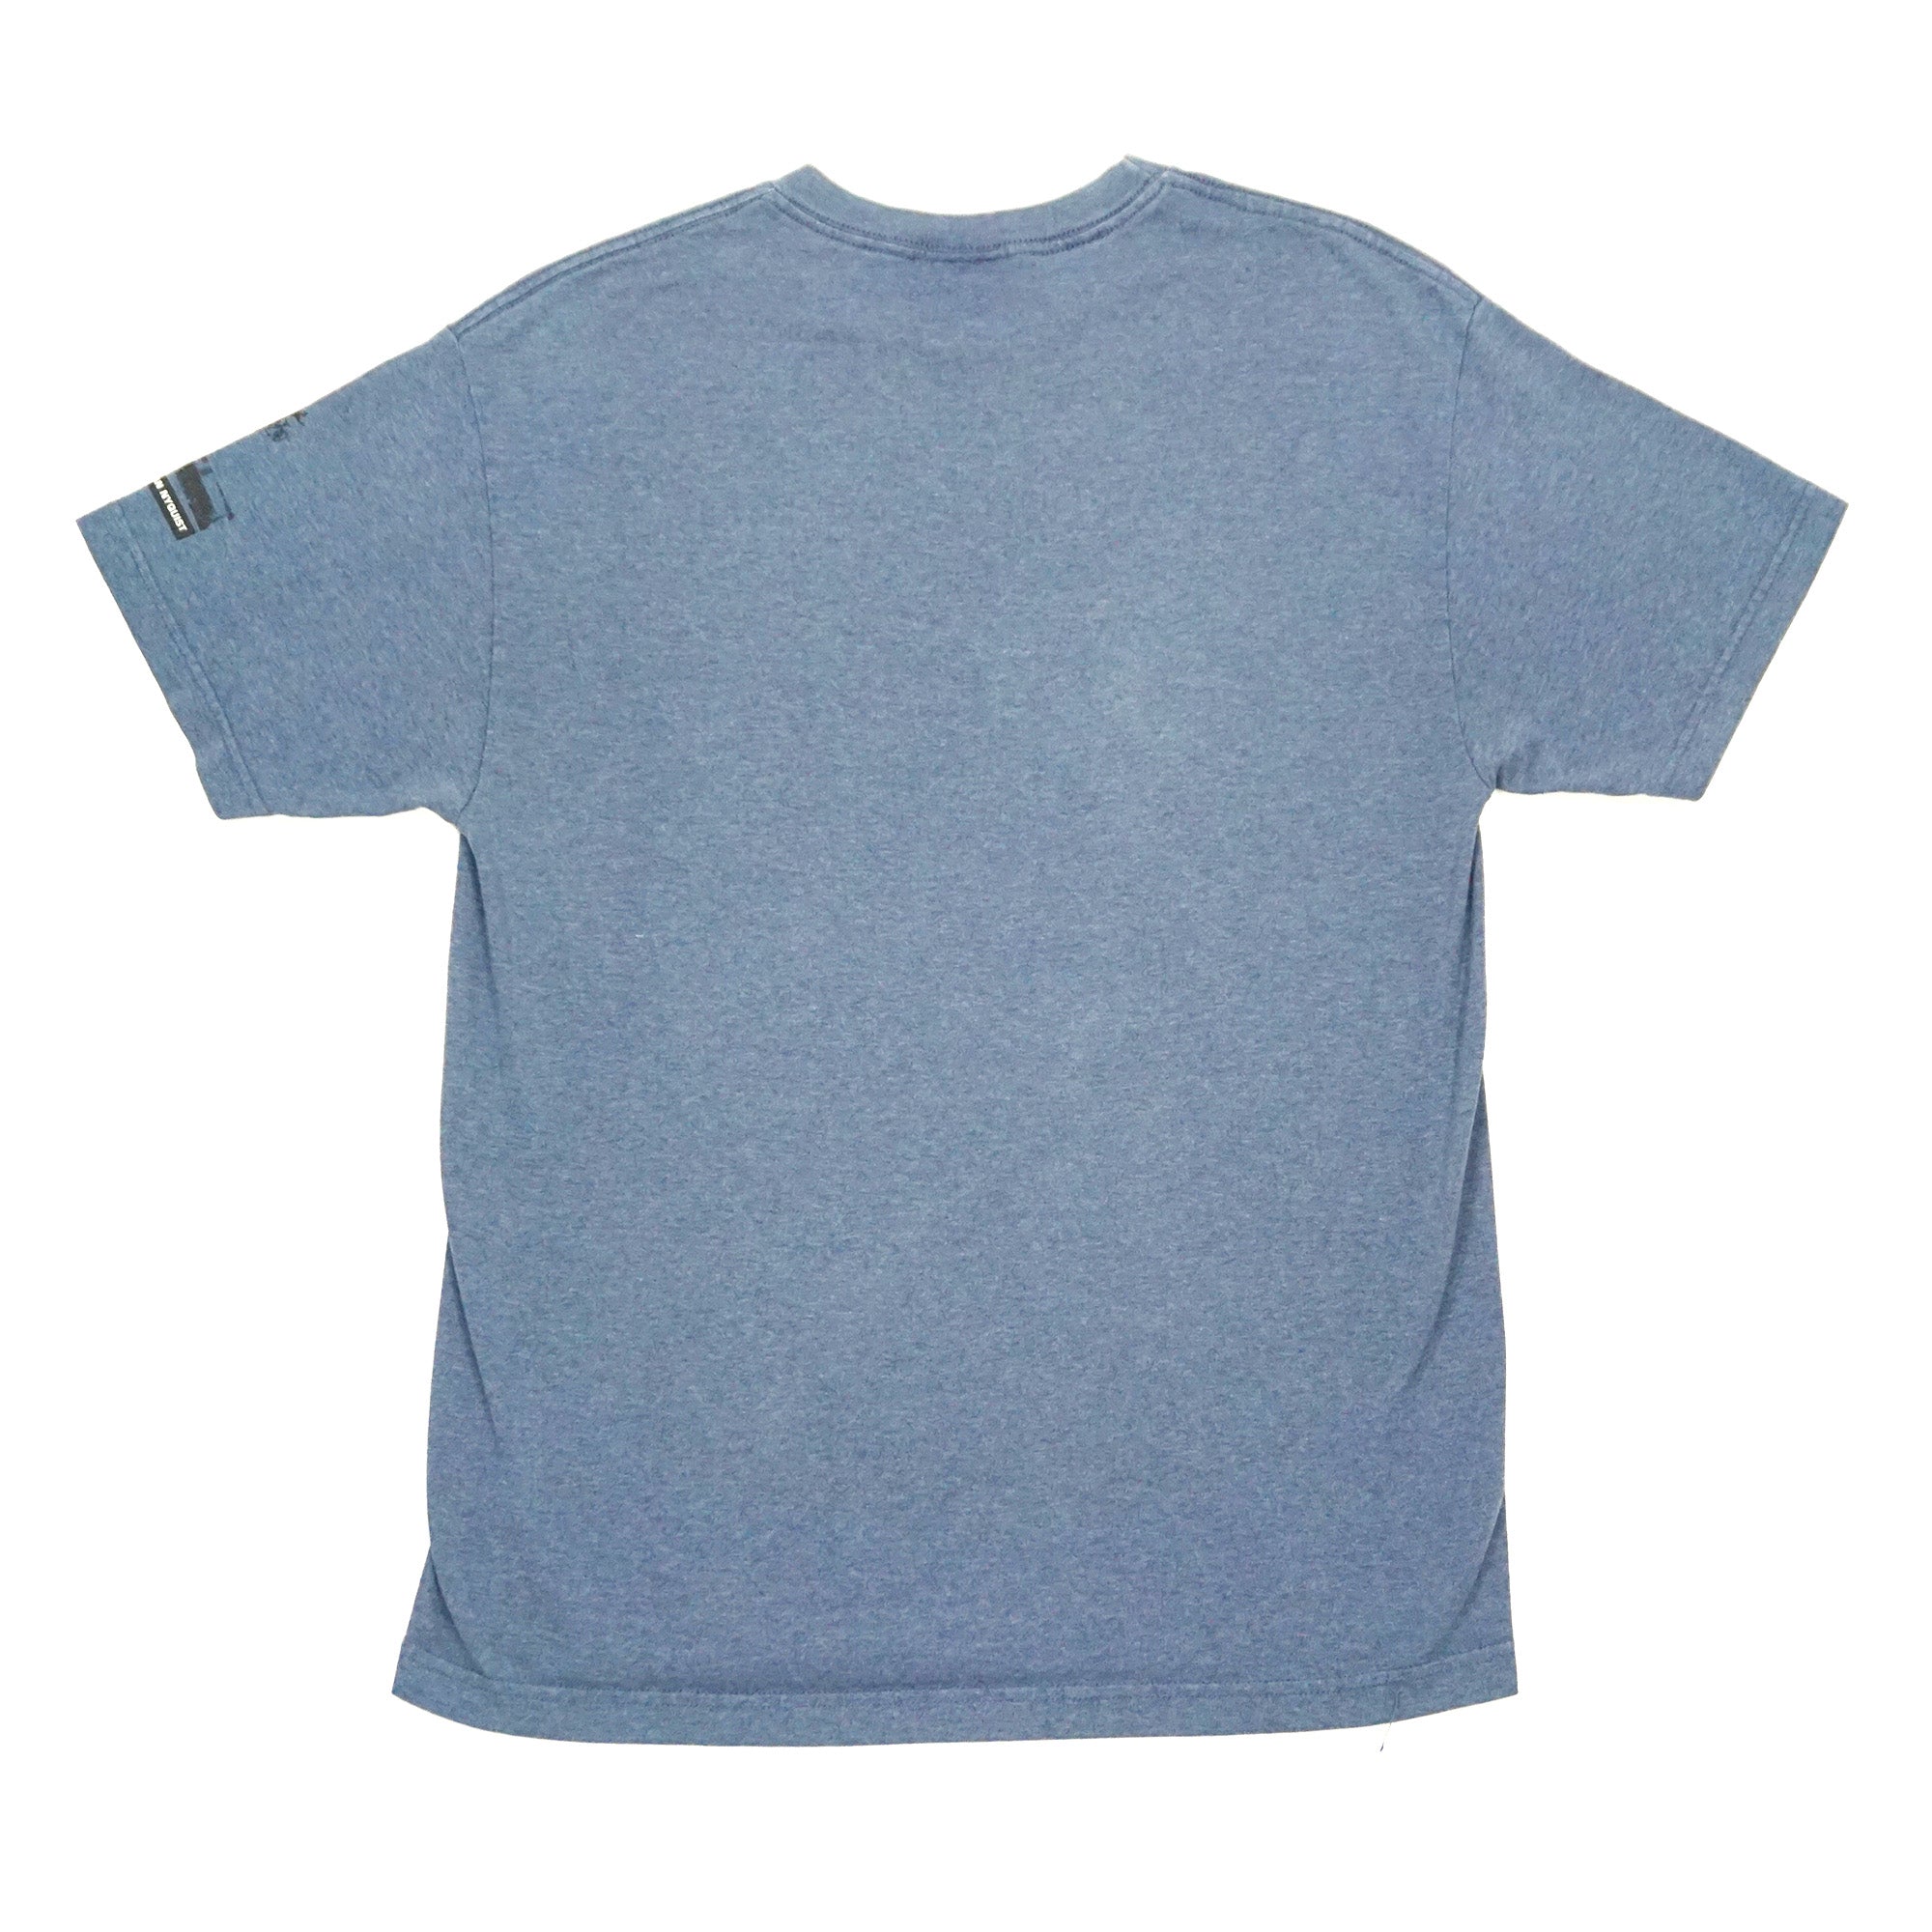 Split - Ryan Nyquist Shirt (L)